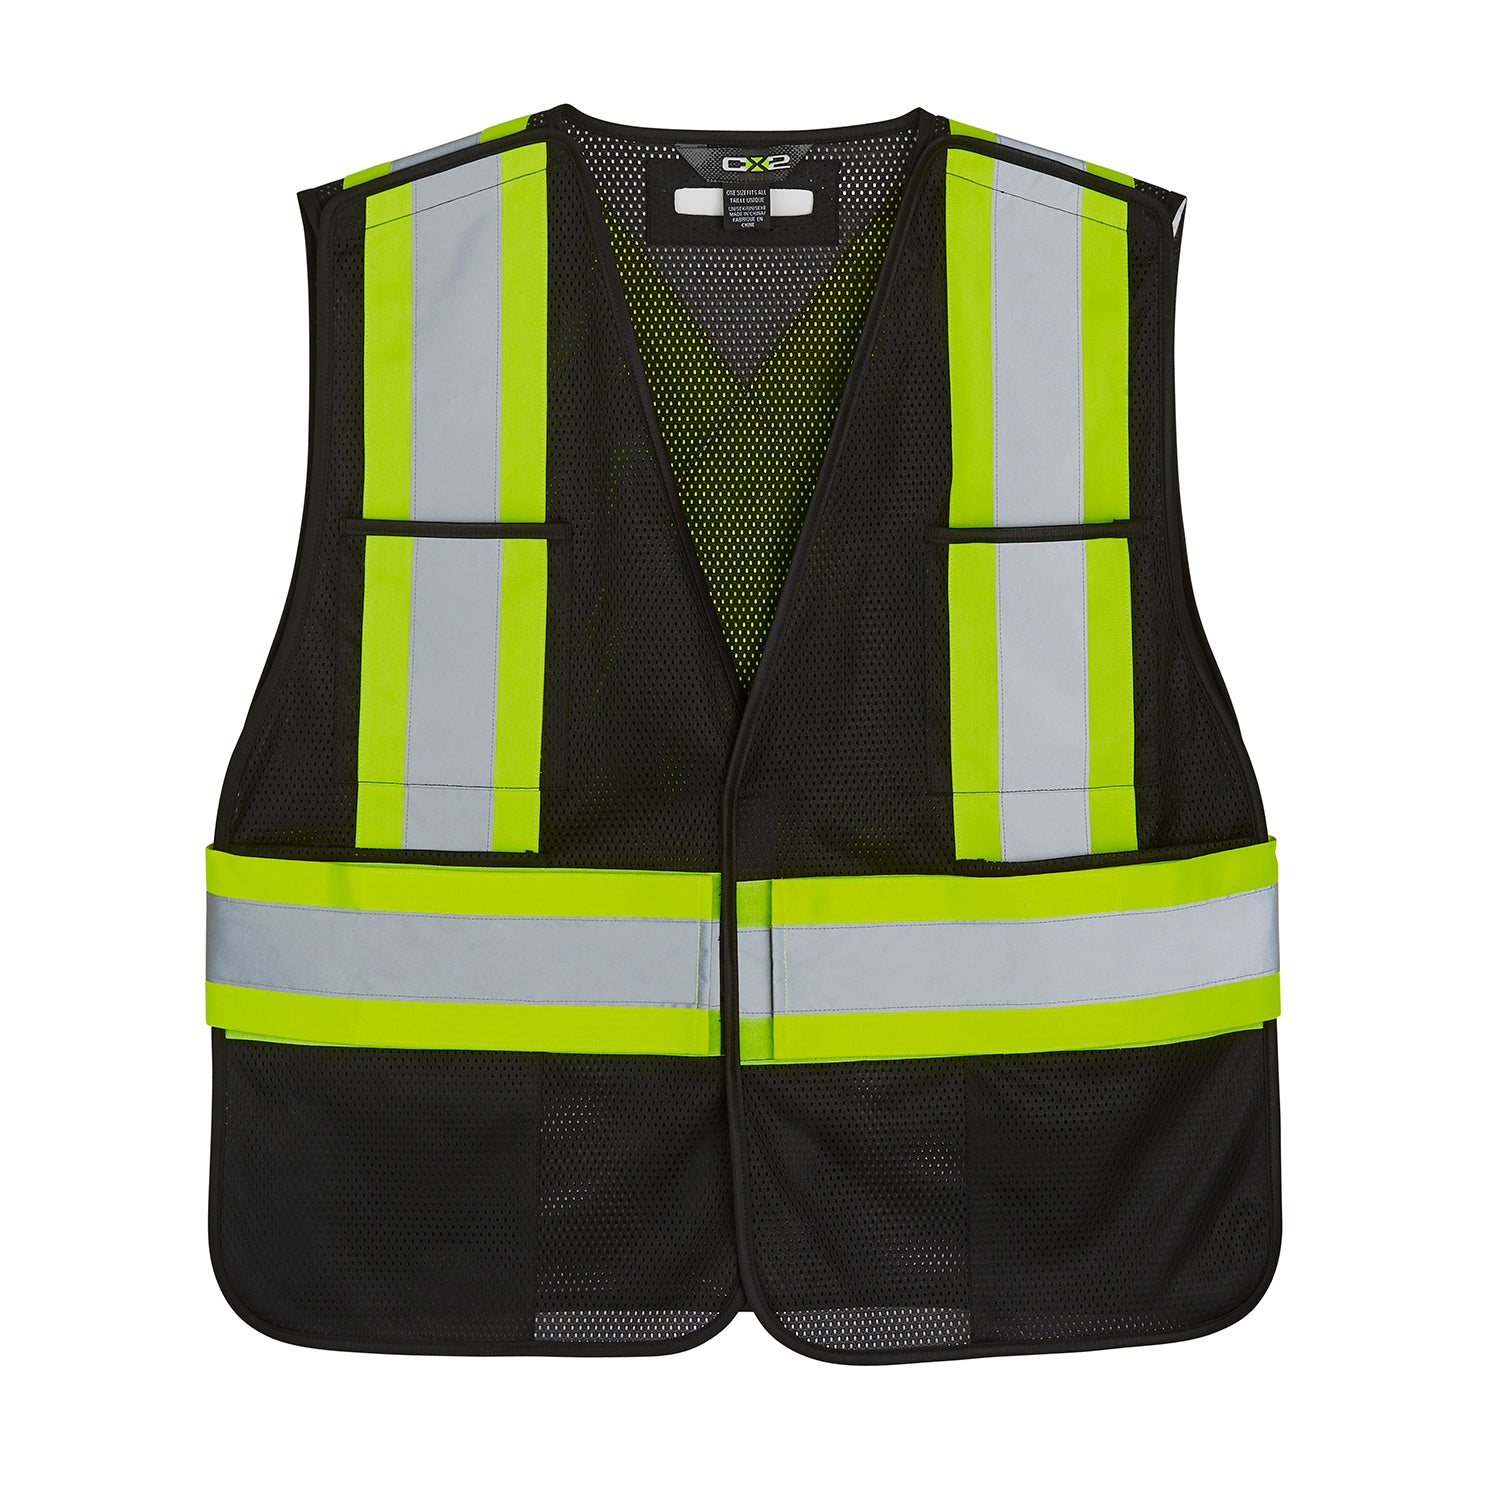 Patrol - One Size Hi-Vis Safety Vest - CX2 L01180